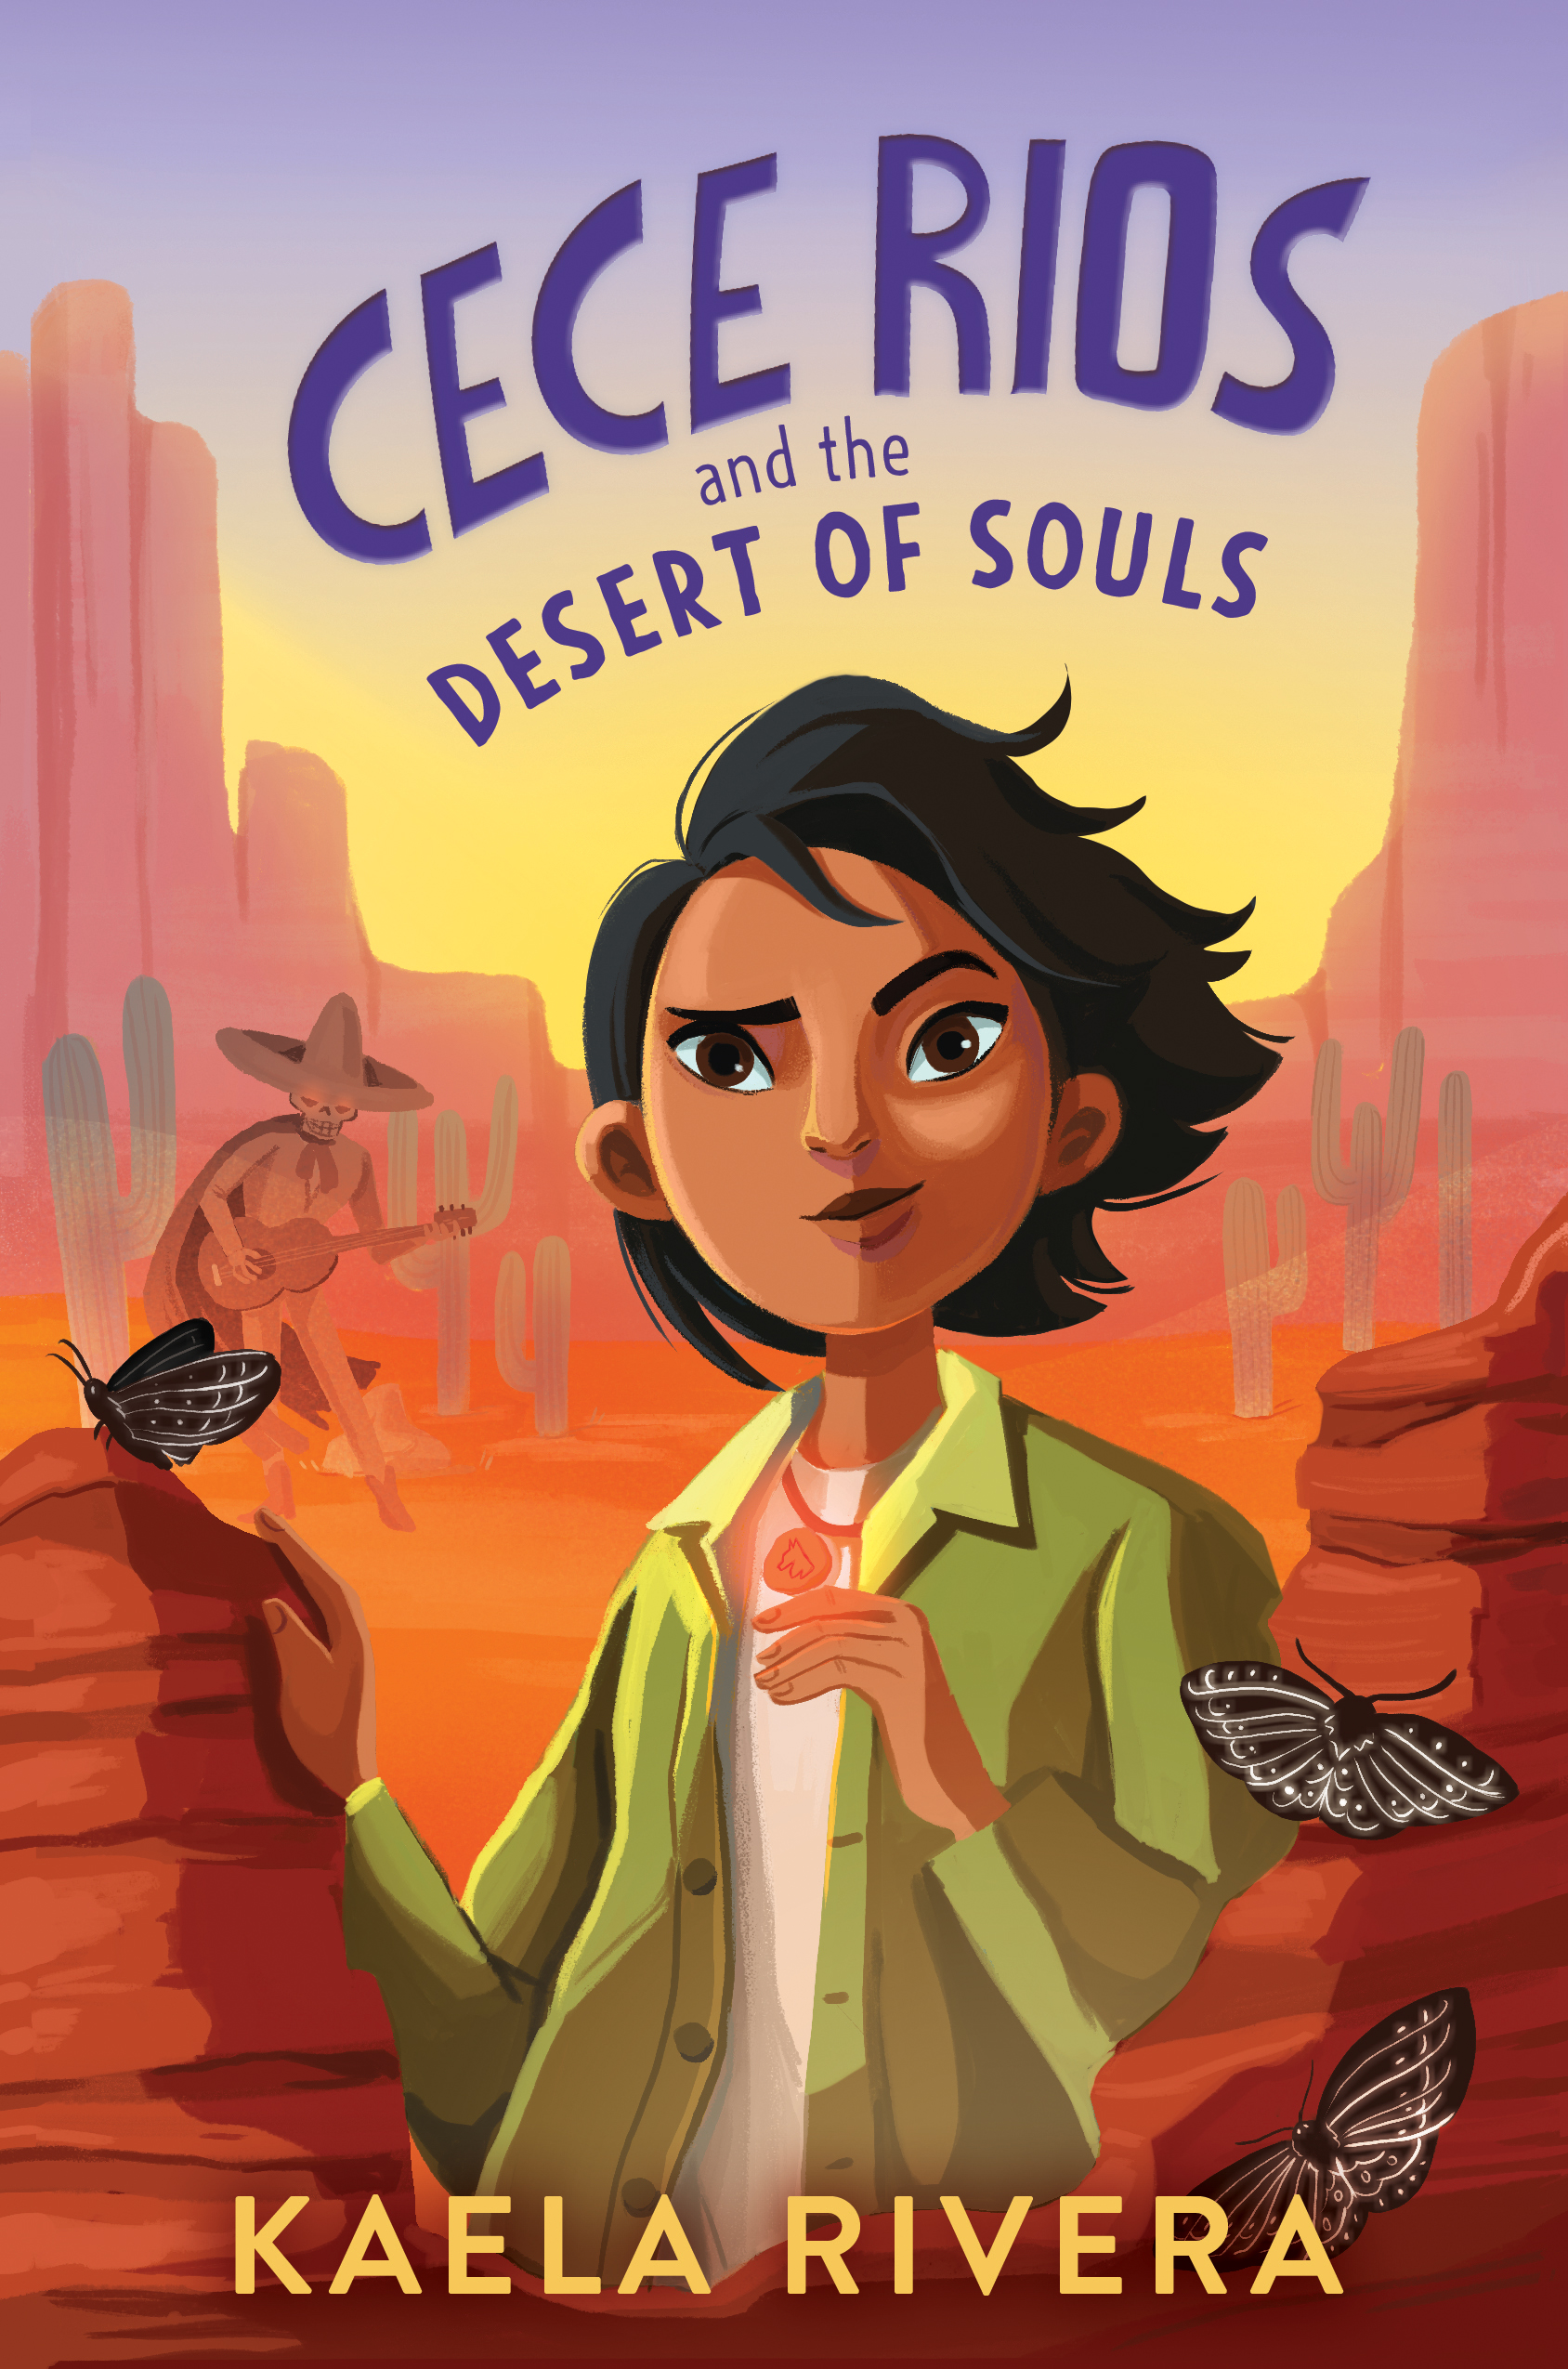 Cece_Rios_and_the_Desert_of_Souls_-_Kaela_Rivera